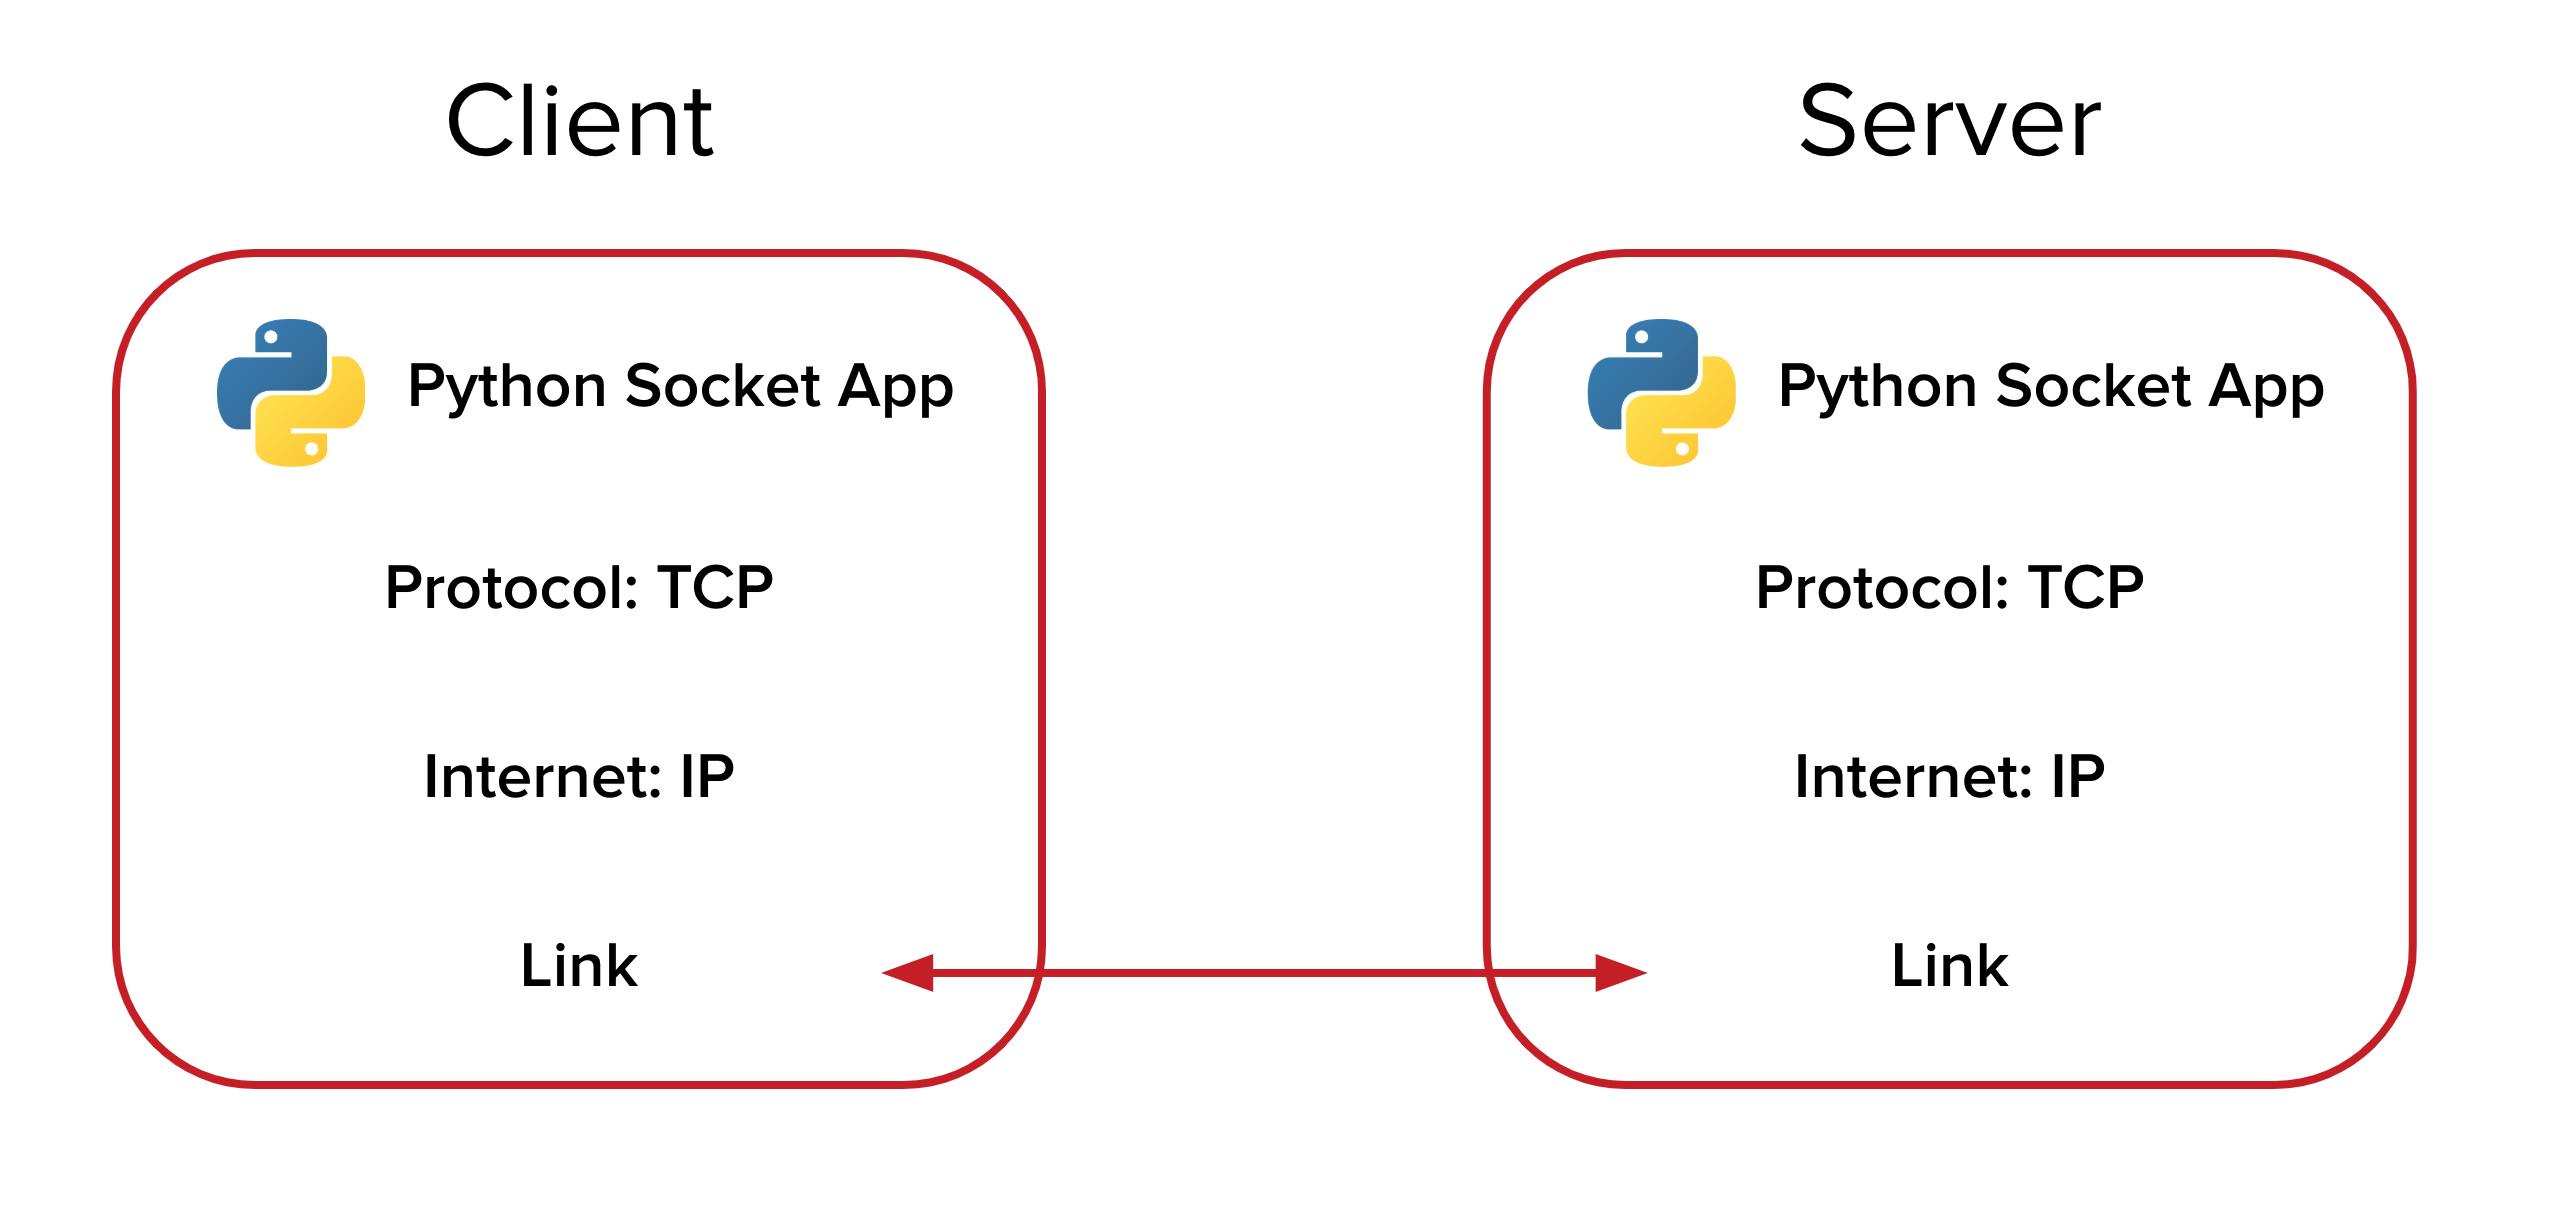 Python network stack